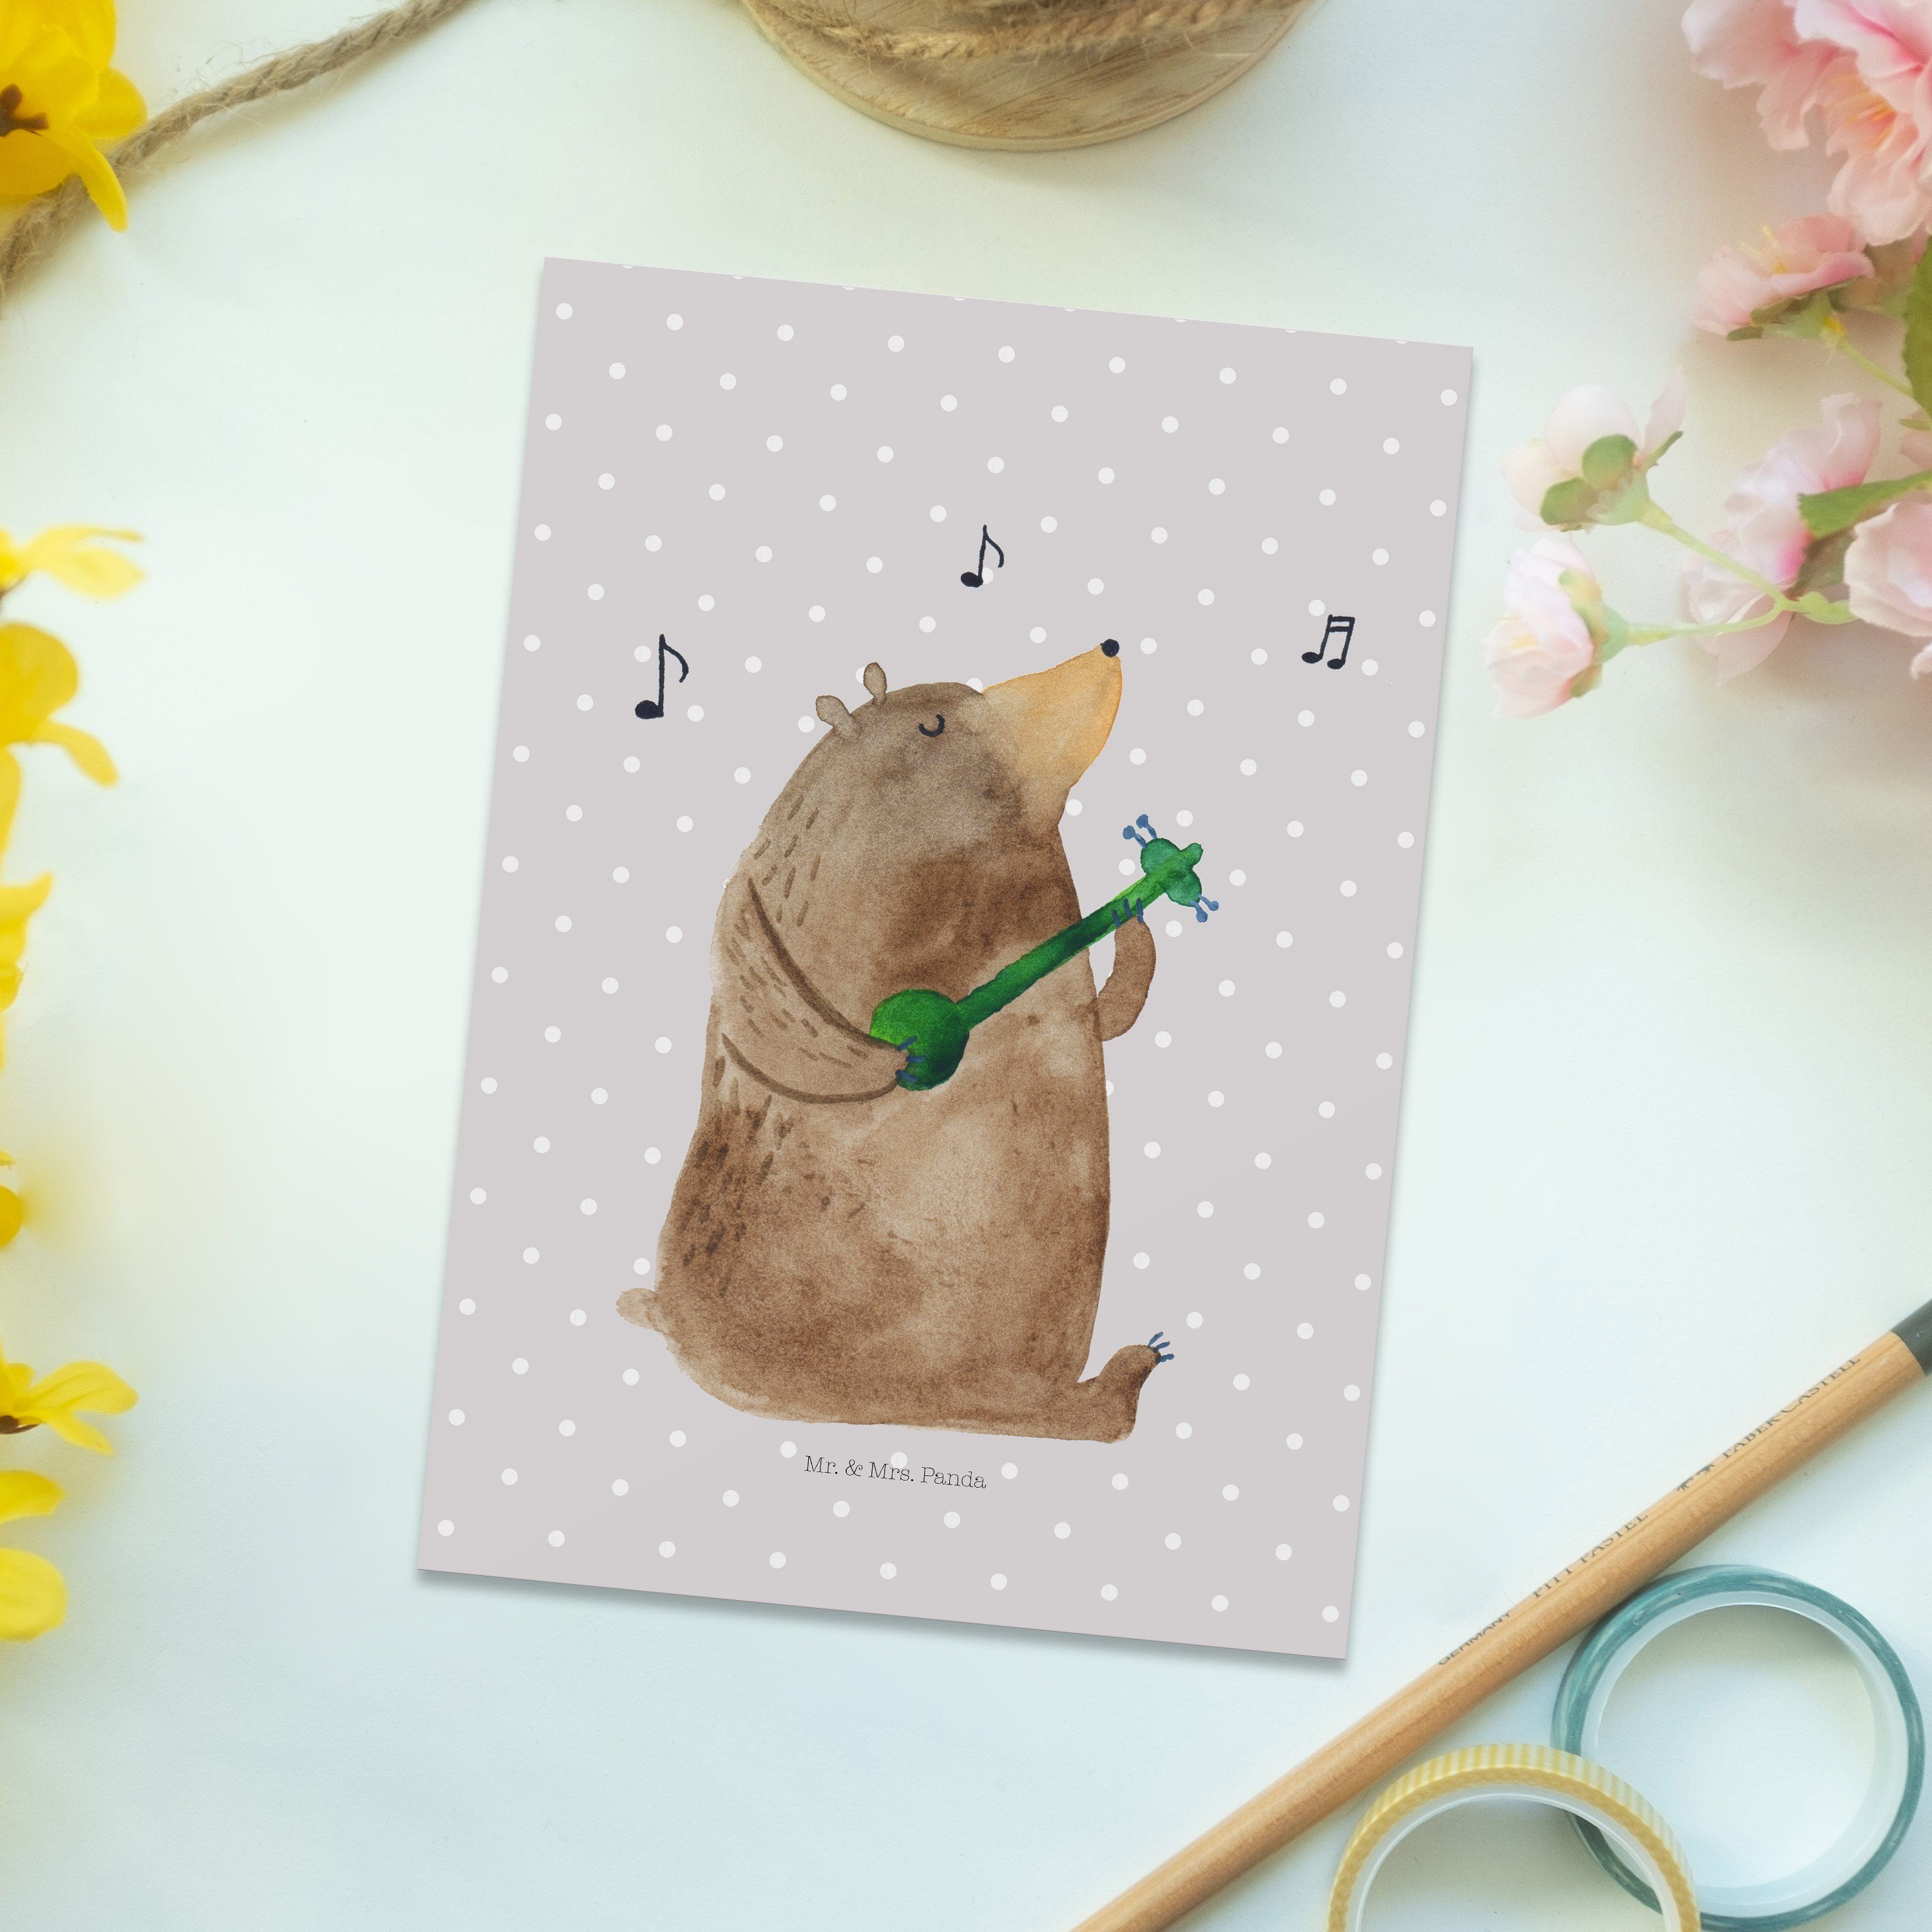 & Geschenk, Postkarte Mr. Mrs. Geburtstagsk Panda Gitarre - Einladung, Pastell Grau Karte, - Bär